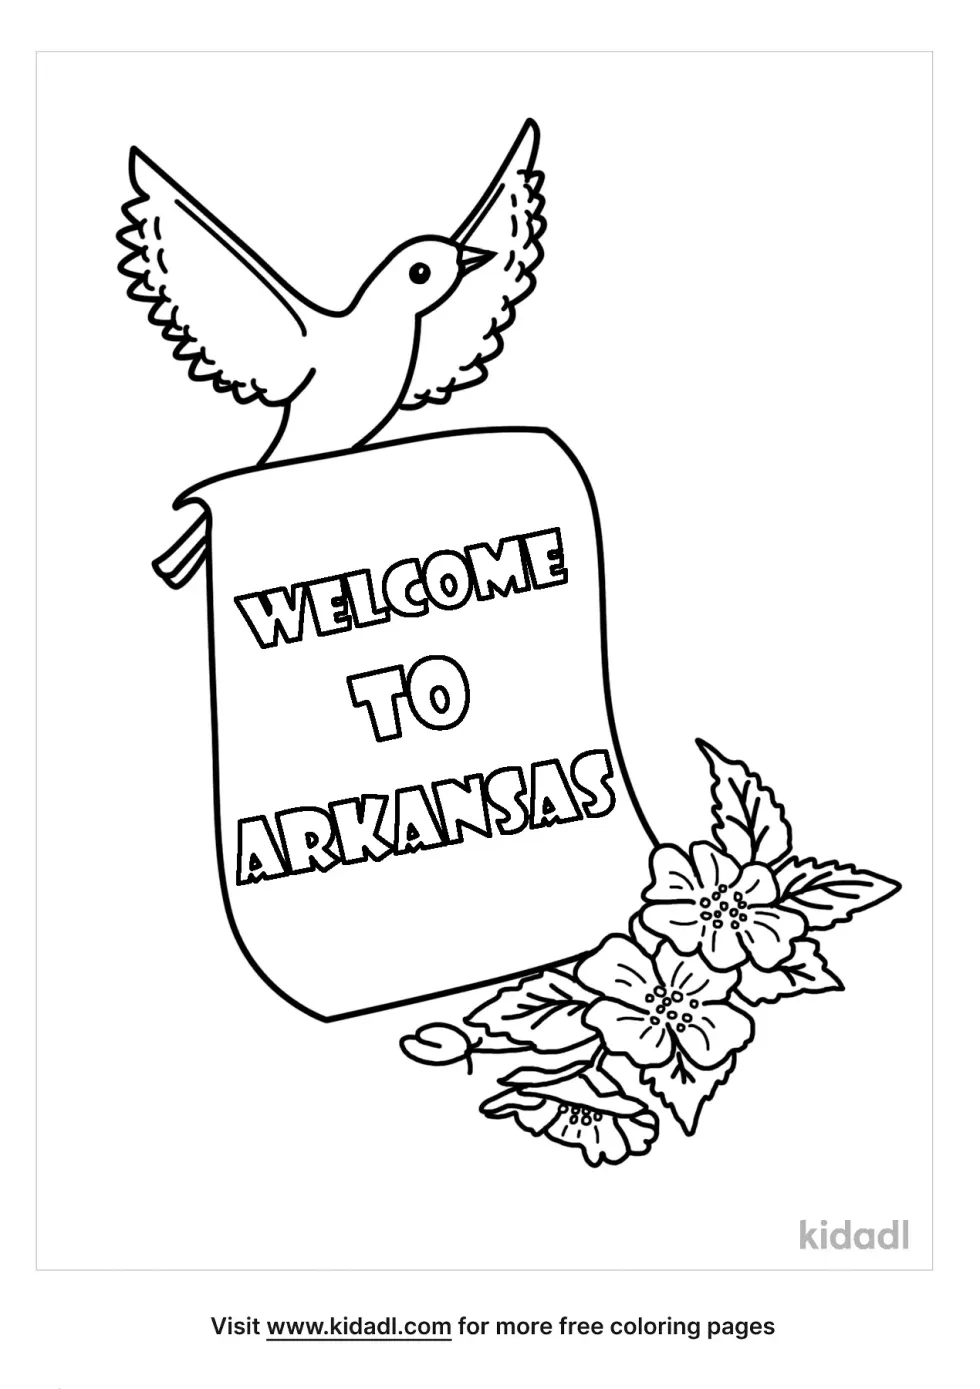 Arkansas Coloring Page